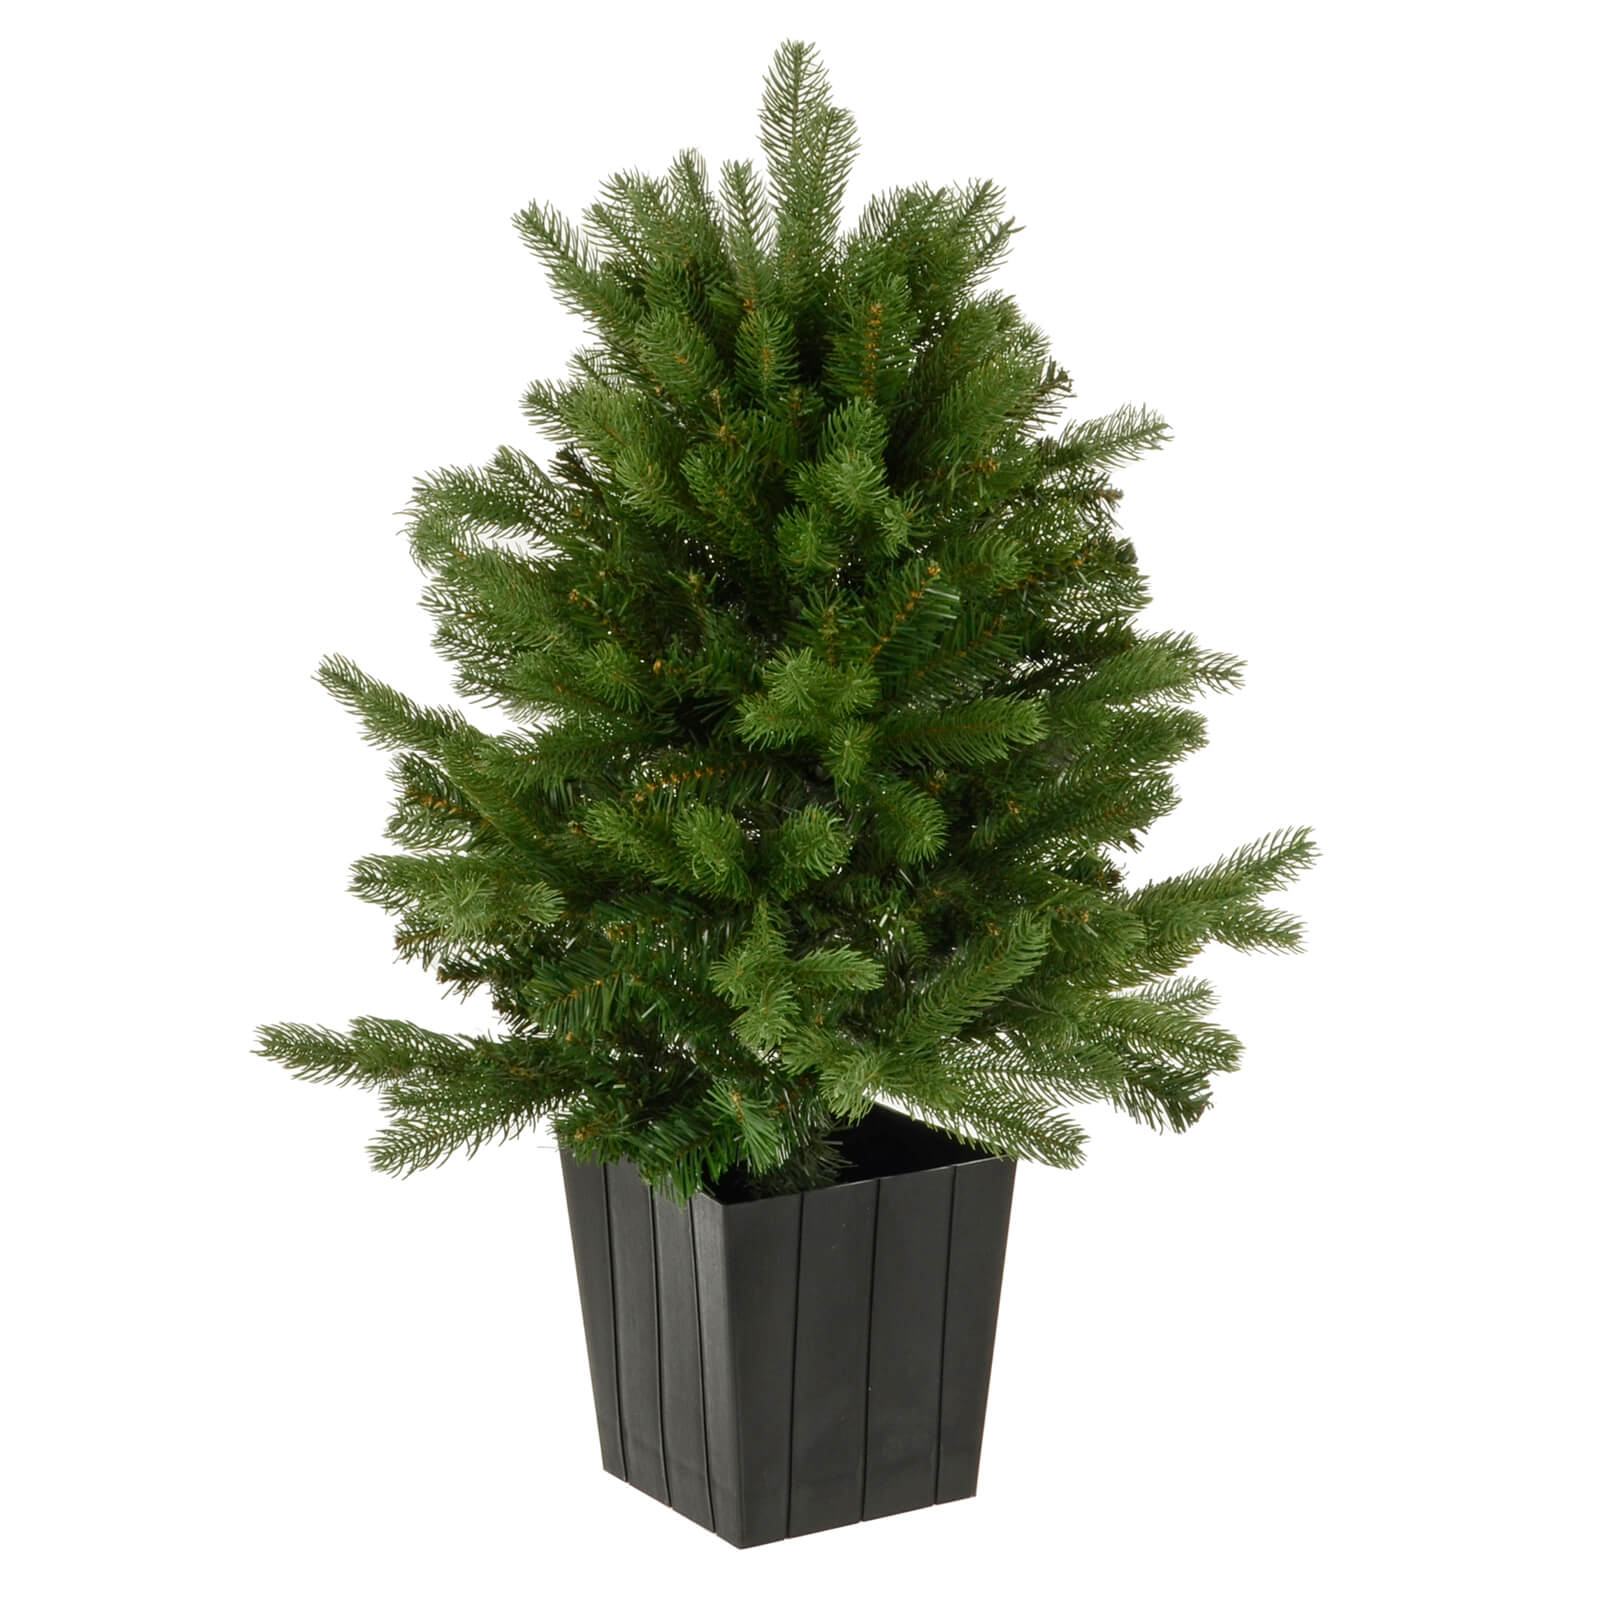 Mr Crimbo 90cm Christmas Tree In Pot Green Artificial Mixed Pine - MrCrimbo.co.uk -XS7271 - -christmas tree